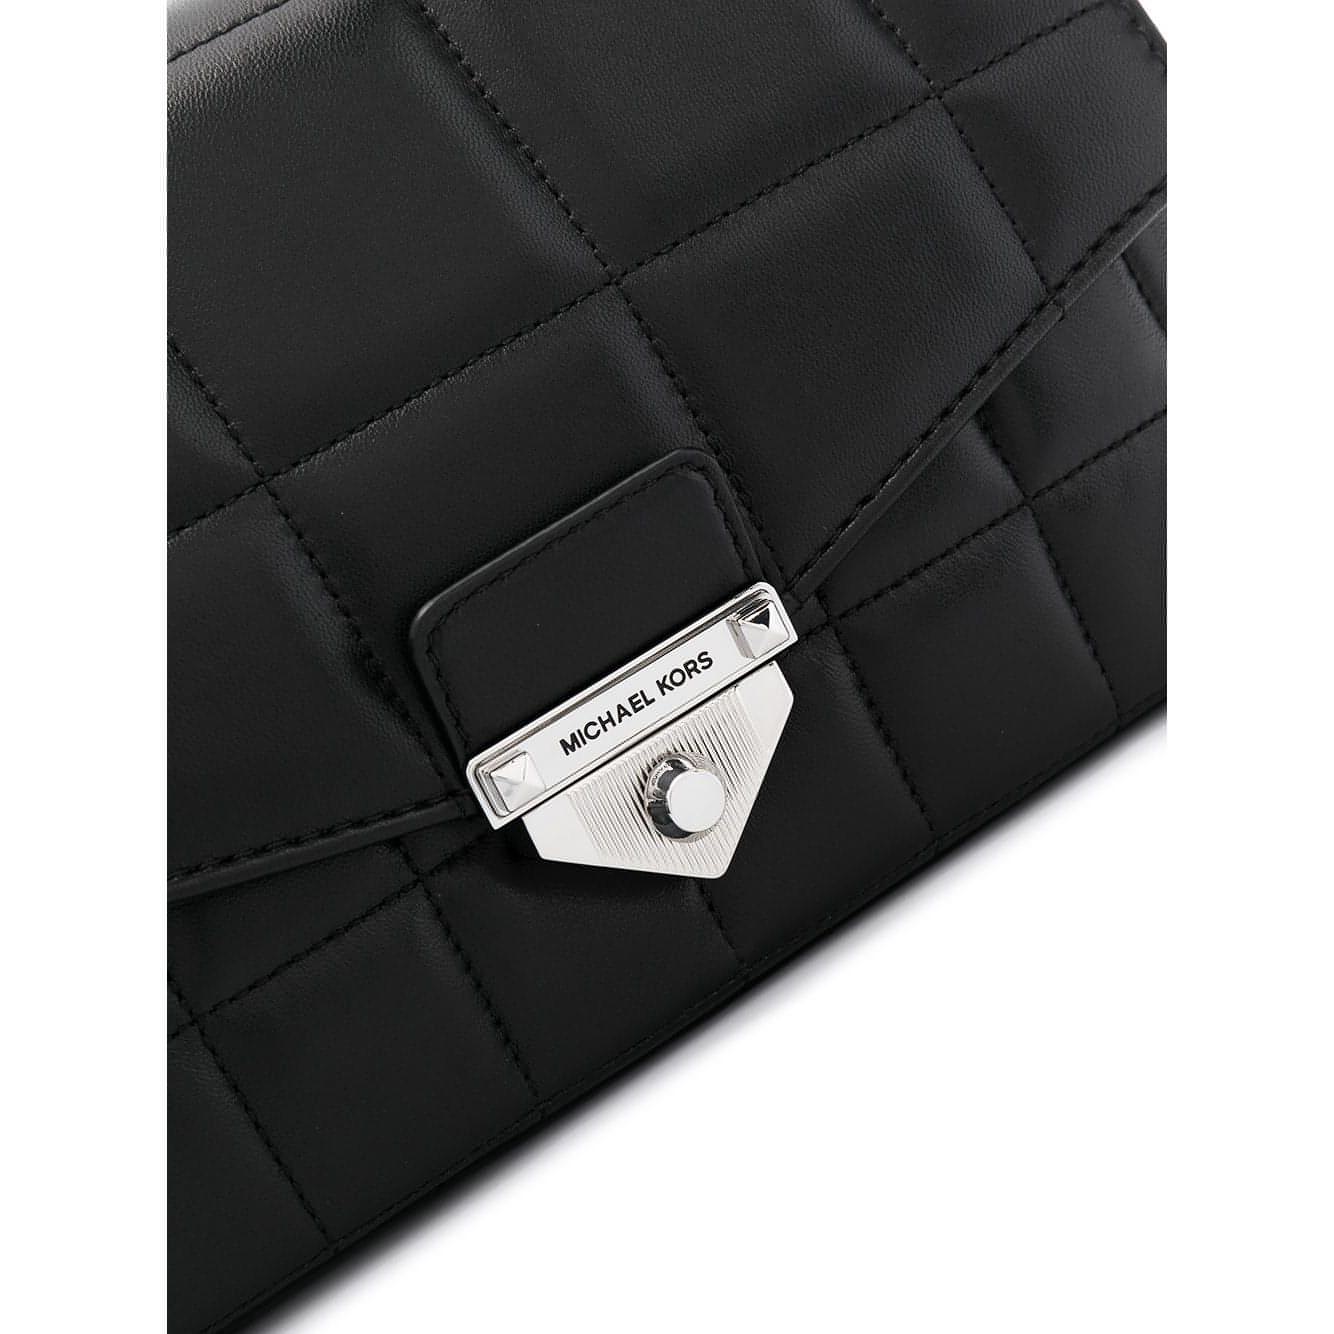 MICHAEL KORS moteriška juoda rankinė per petį LG chain shoulder bag